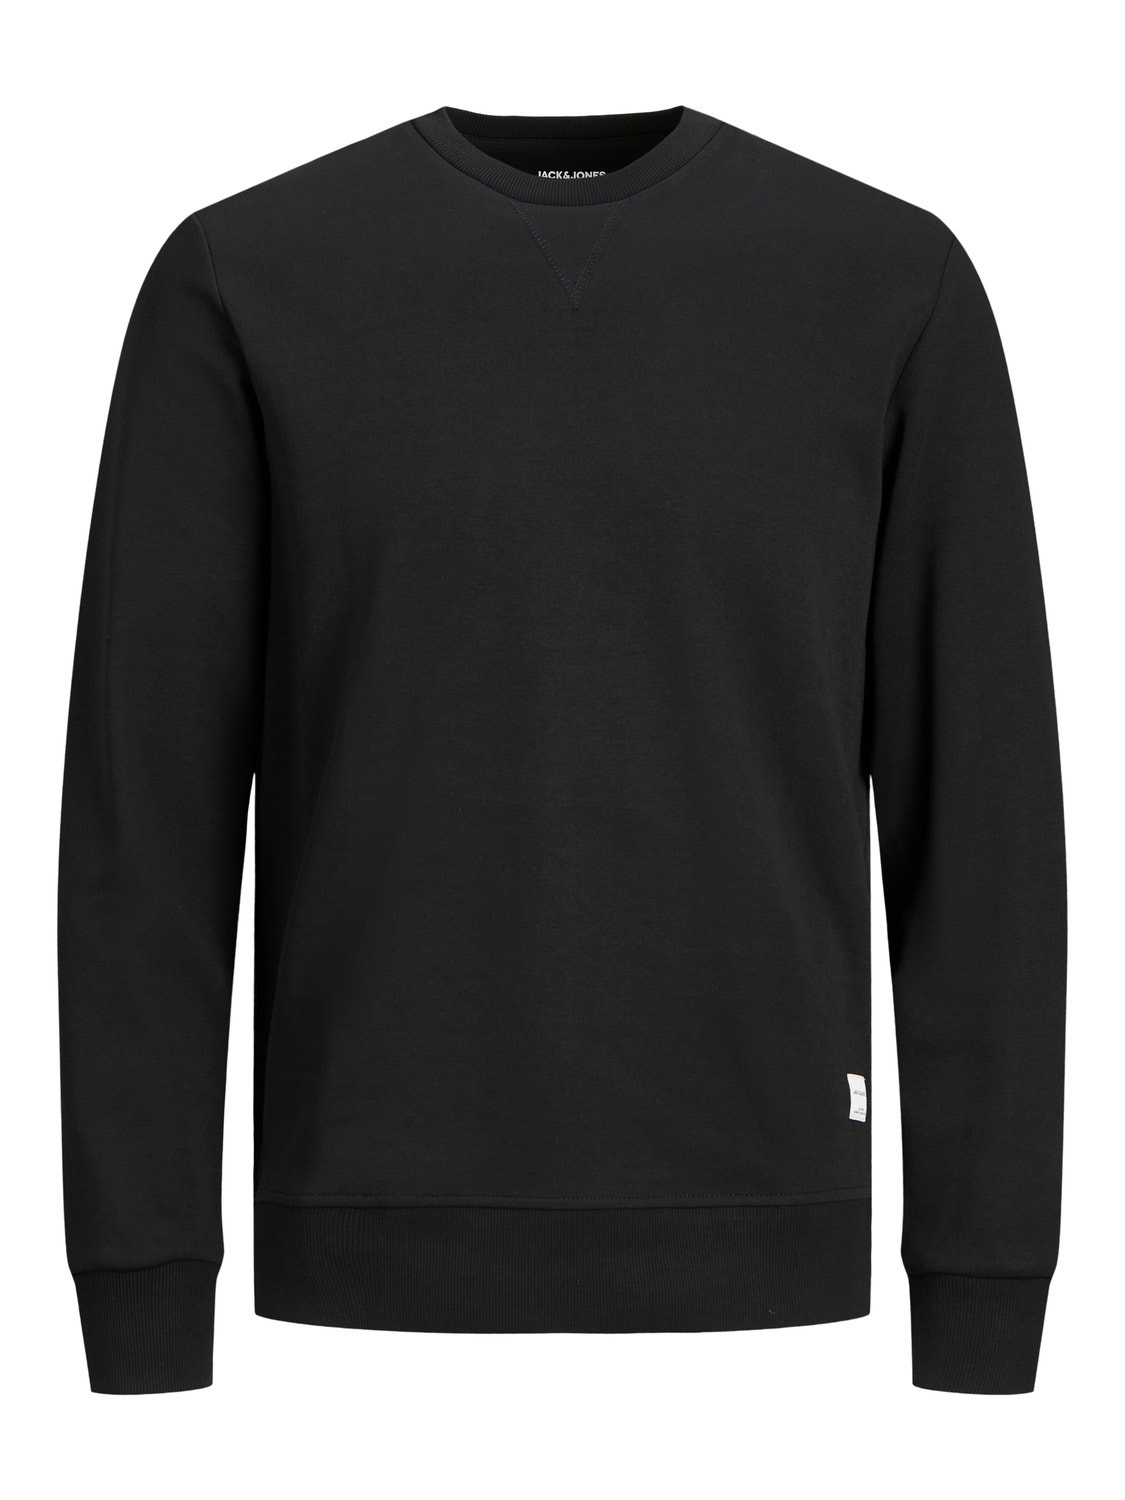 Jack & Jones Plus Size Plain Crewn Neck Sweatshirt -Black - 12182567